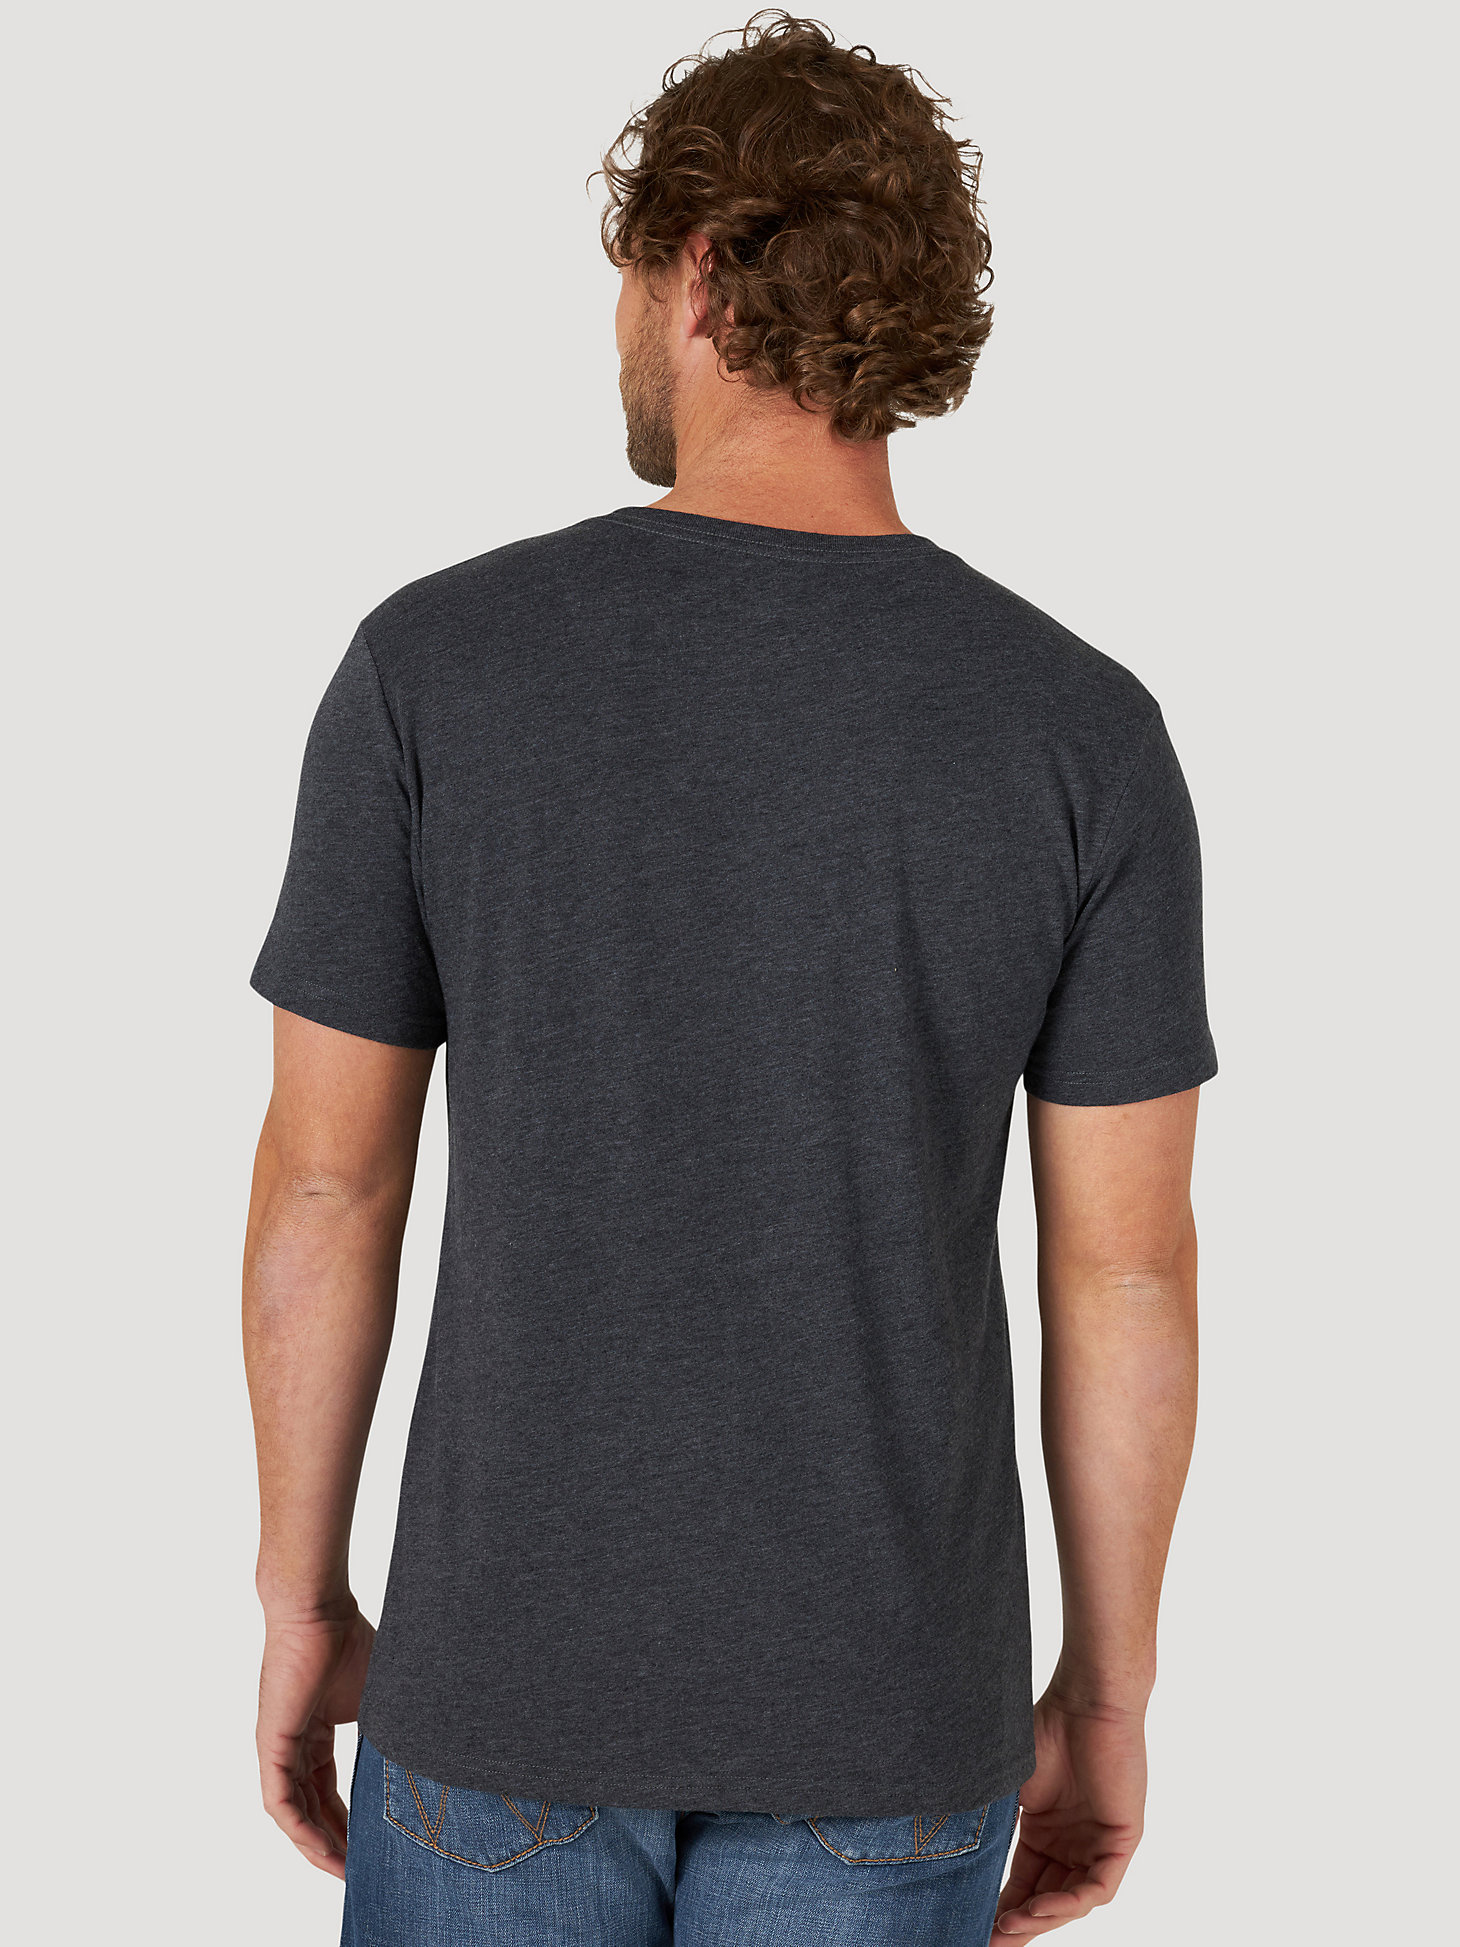 Men's Authentic American Wrangler Graphic T-Shirt in Caviar Heat alternative view 1